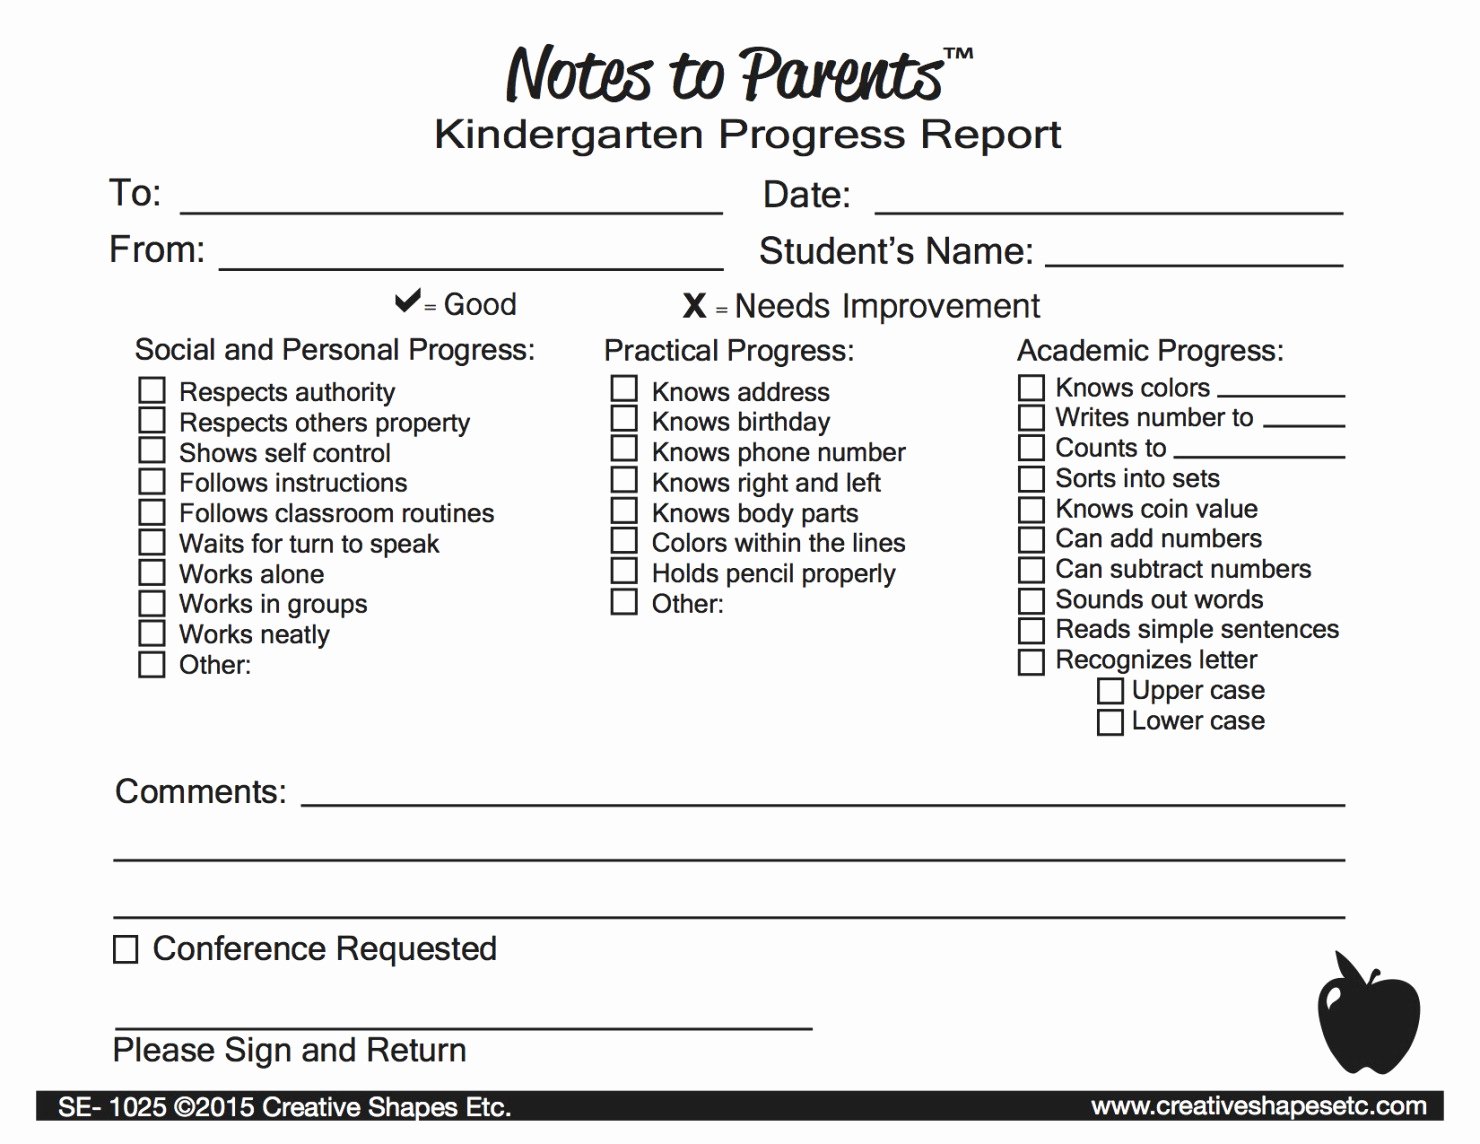 Kindergarten Progress Report Template Awesome Creative Shapes Notes to Parents Kindergarten Progress